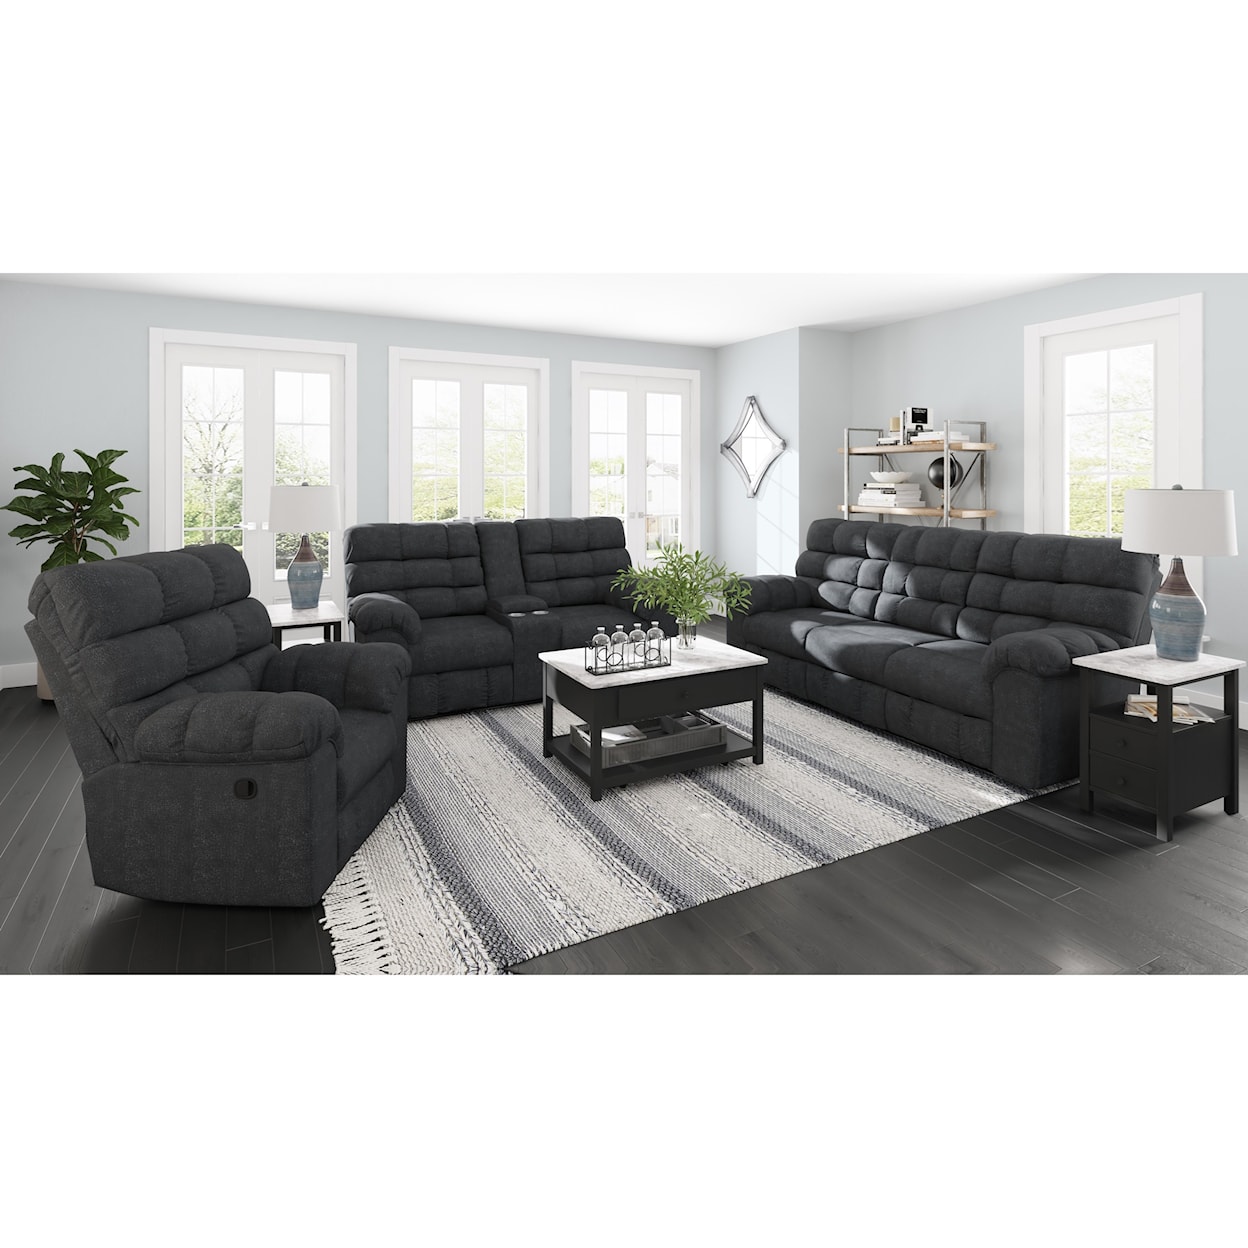 Ashley Furniture Signature Design Wilhurst Reclining Living Room Group